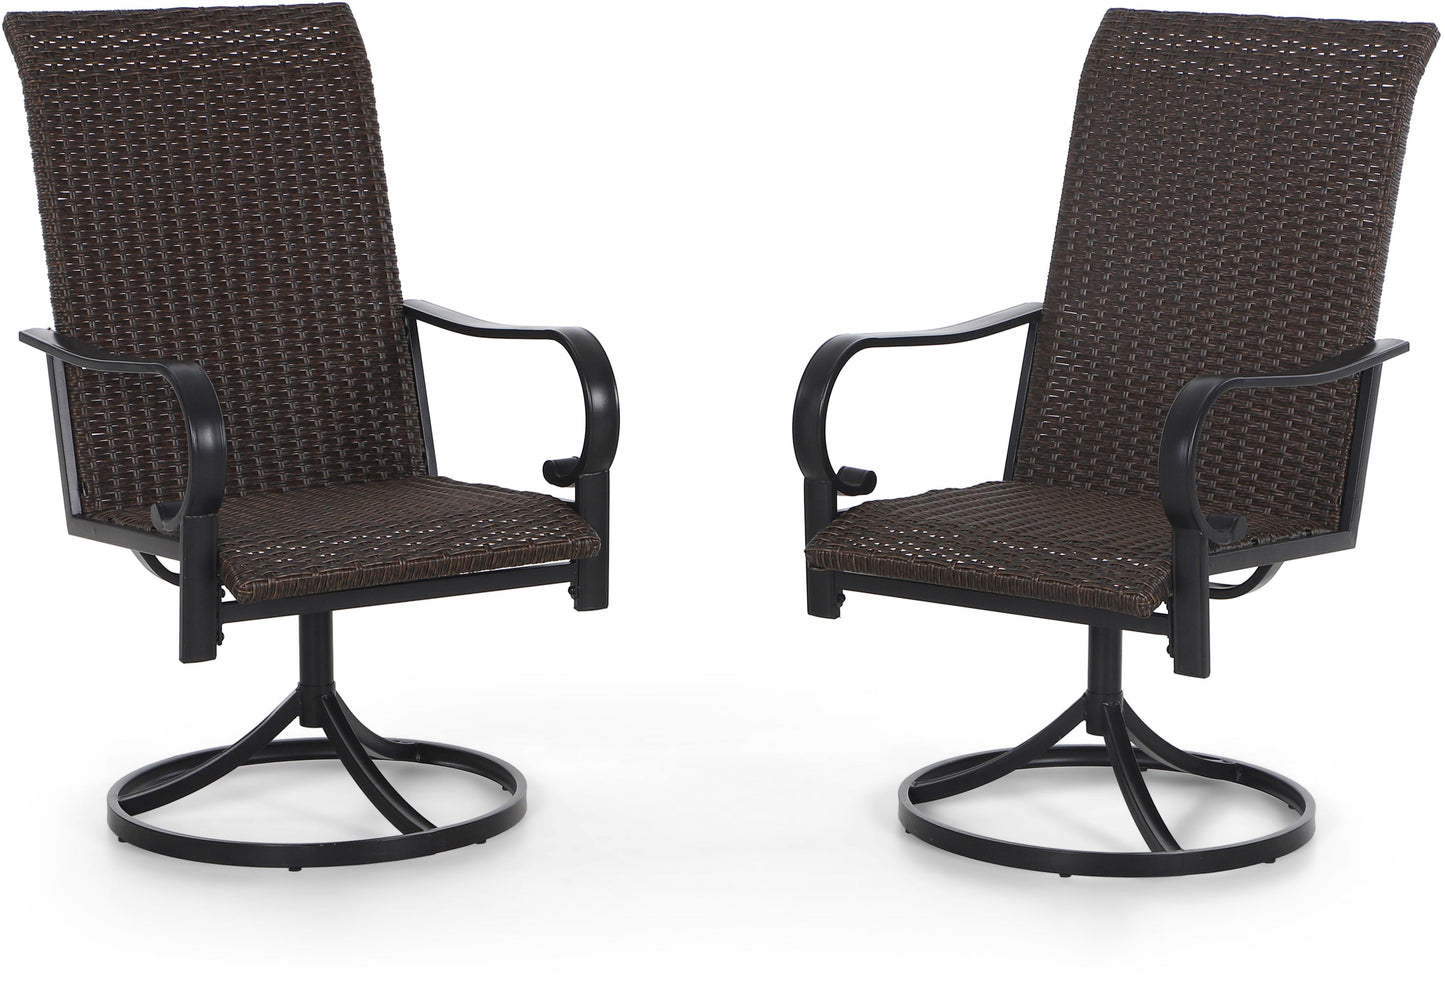 Sophia & William Outdoor Wicker Rattan Swivel Dining Chairs Set of 2